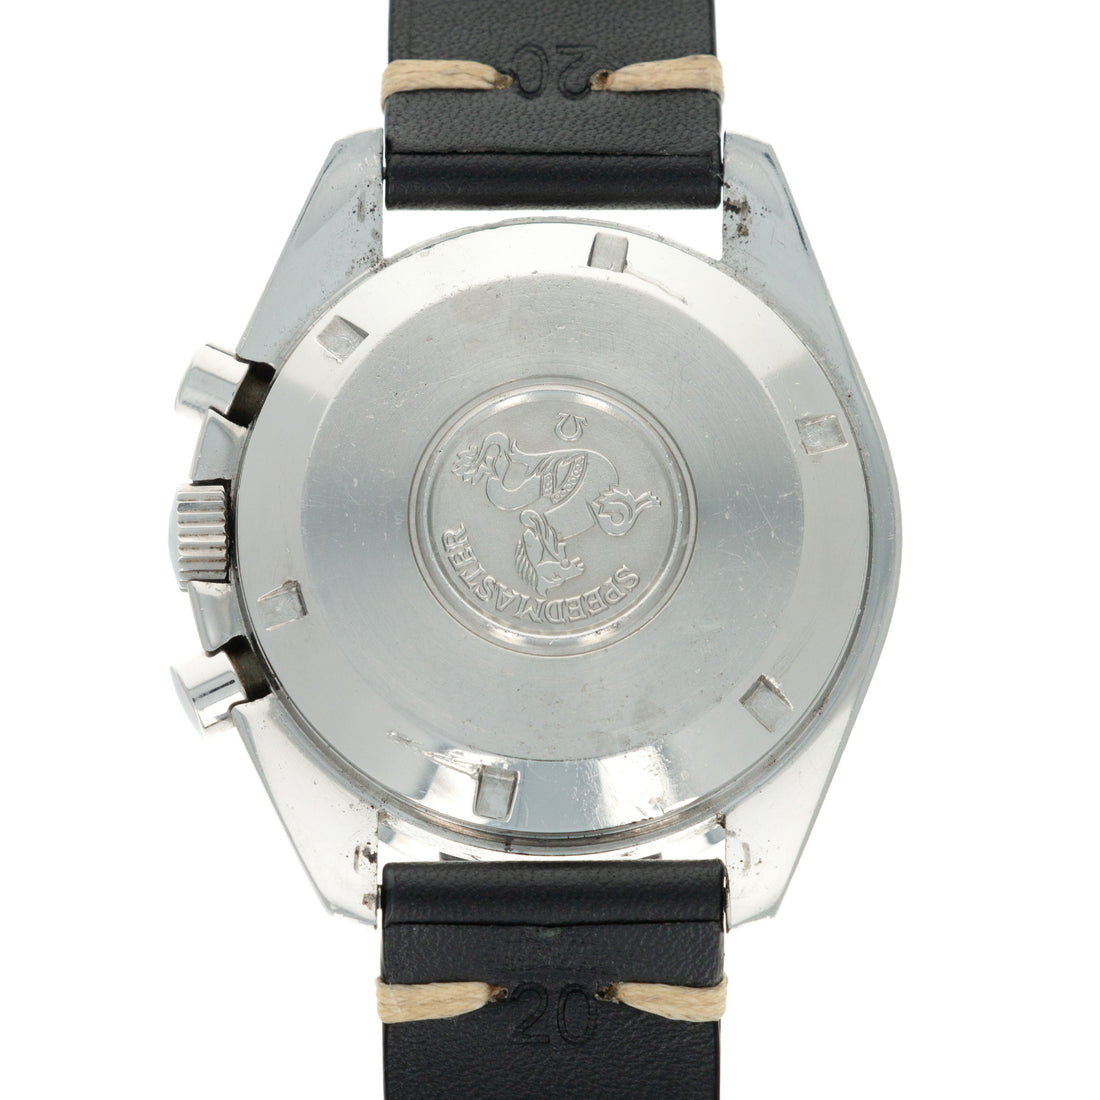 Omega Speedmaster Holy Grail Watch, Ref. 376.0822